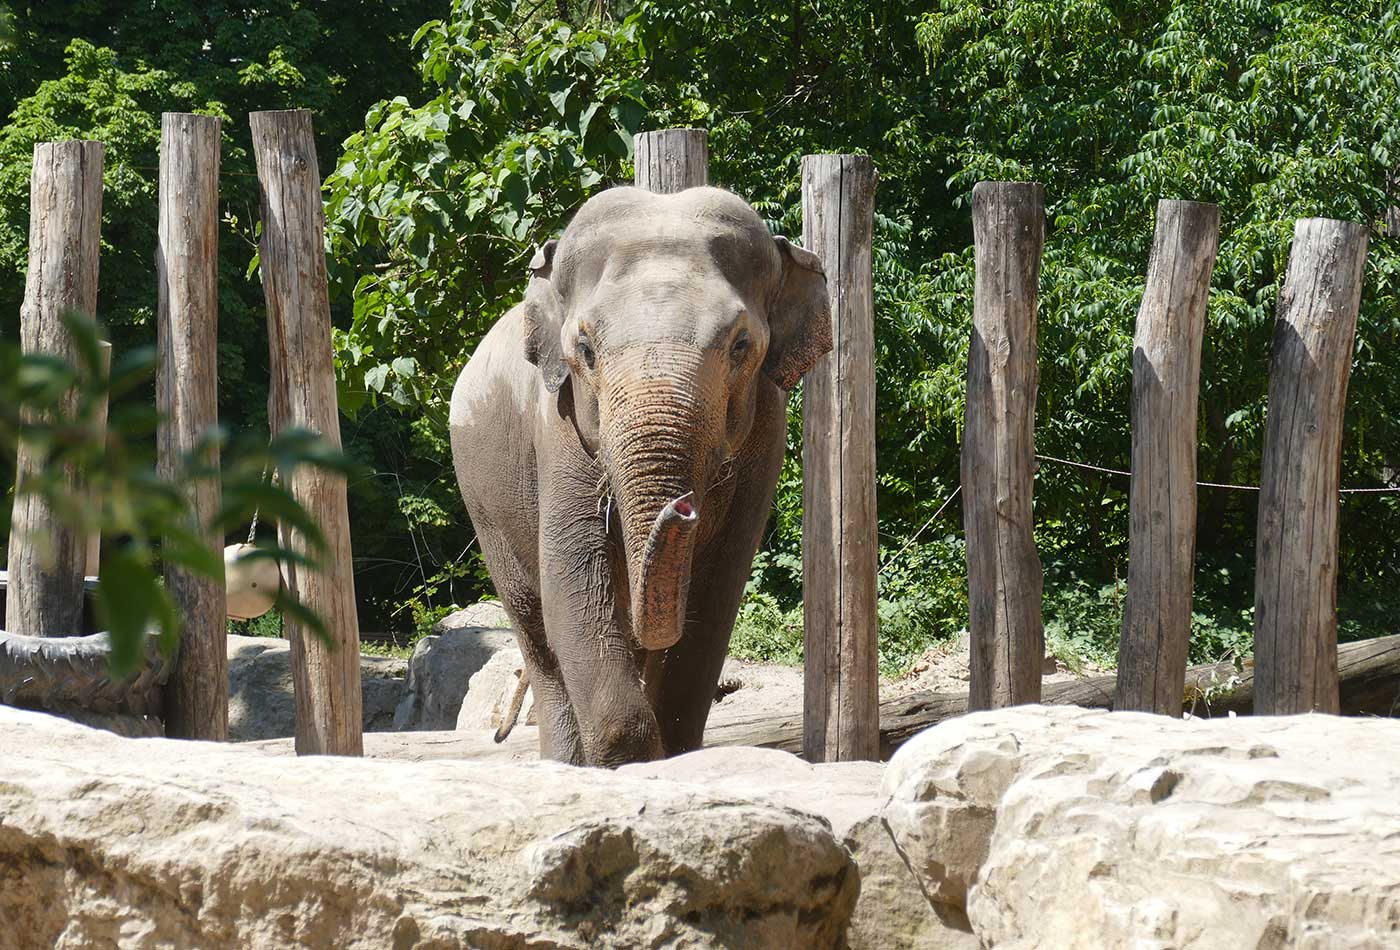 Foto 1: Elefant Tarak wird den Zoo Heidelberg im Juli verlassen. Er ist nun reif genug, um in einen anderen Zoo umzuziehen. (Foto: Heidrun Knigge/Zoo Heidelberg)